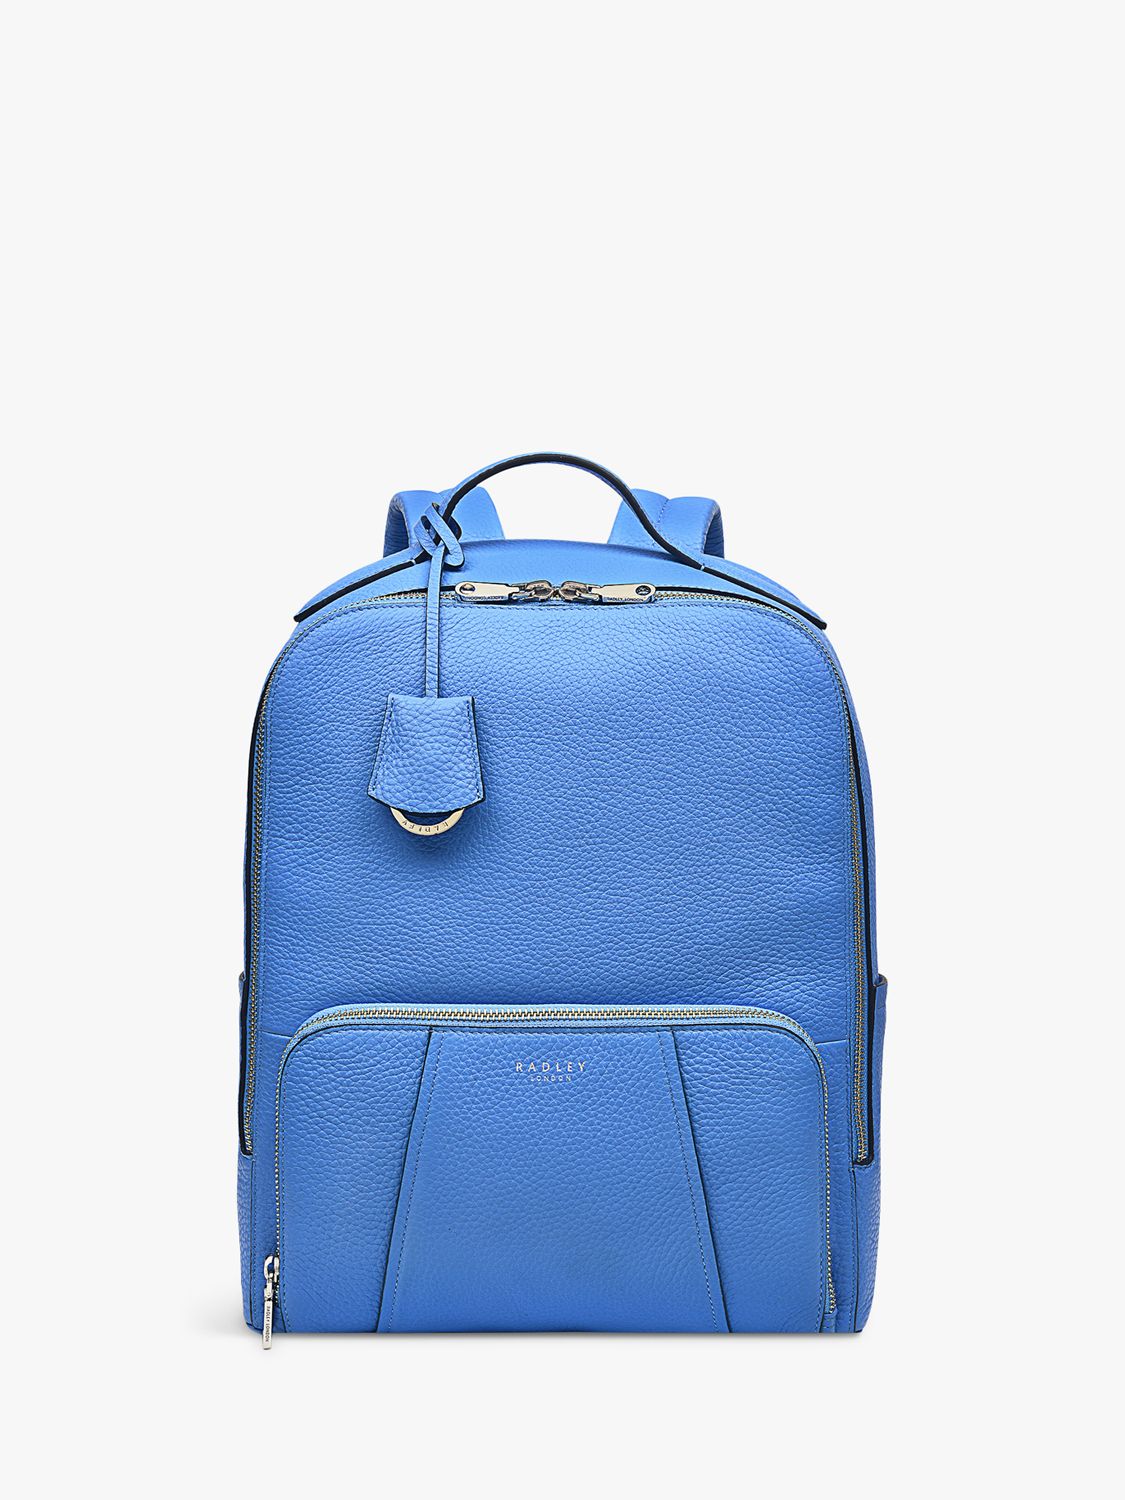 Radley Wood Street 2.0 Medium Backpack, Tranquil Blue at John Lewis ...